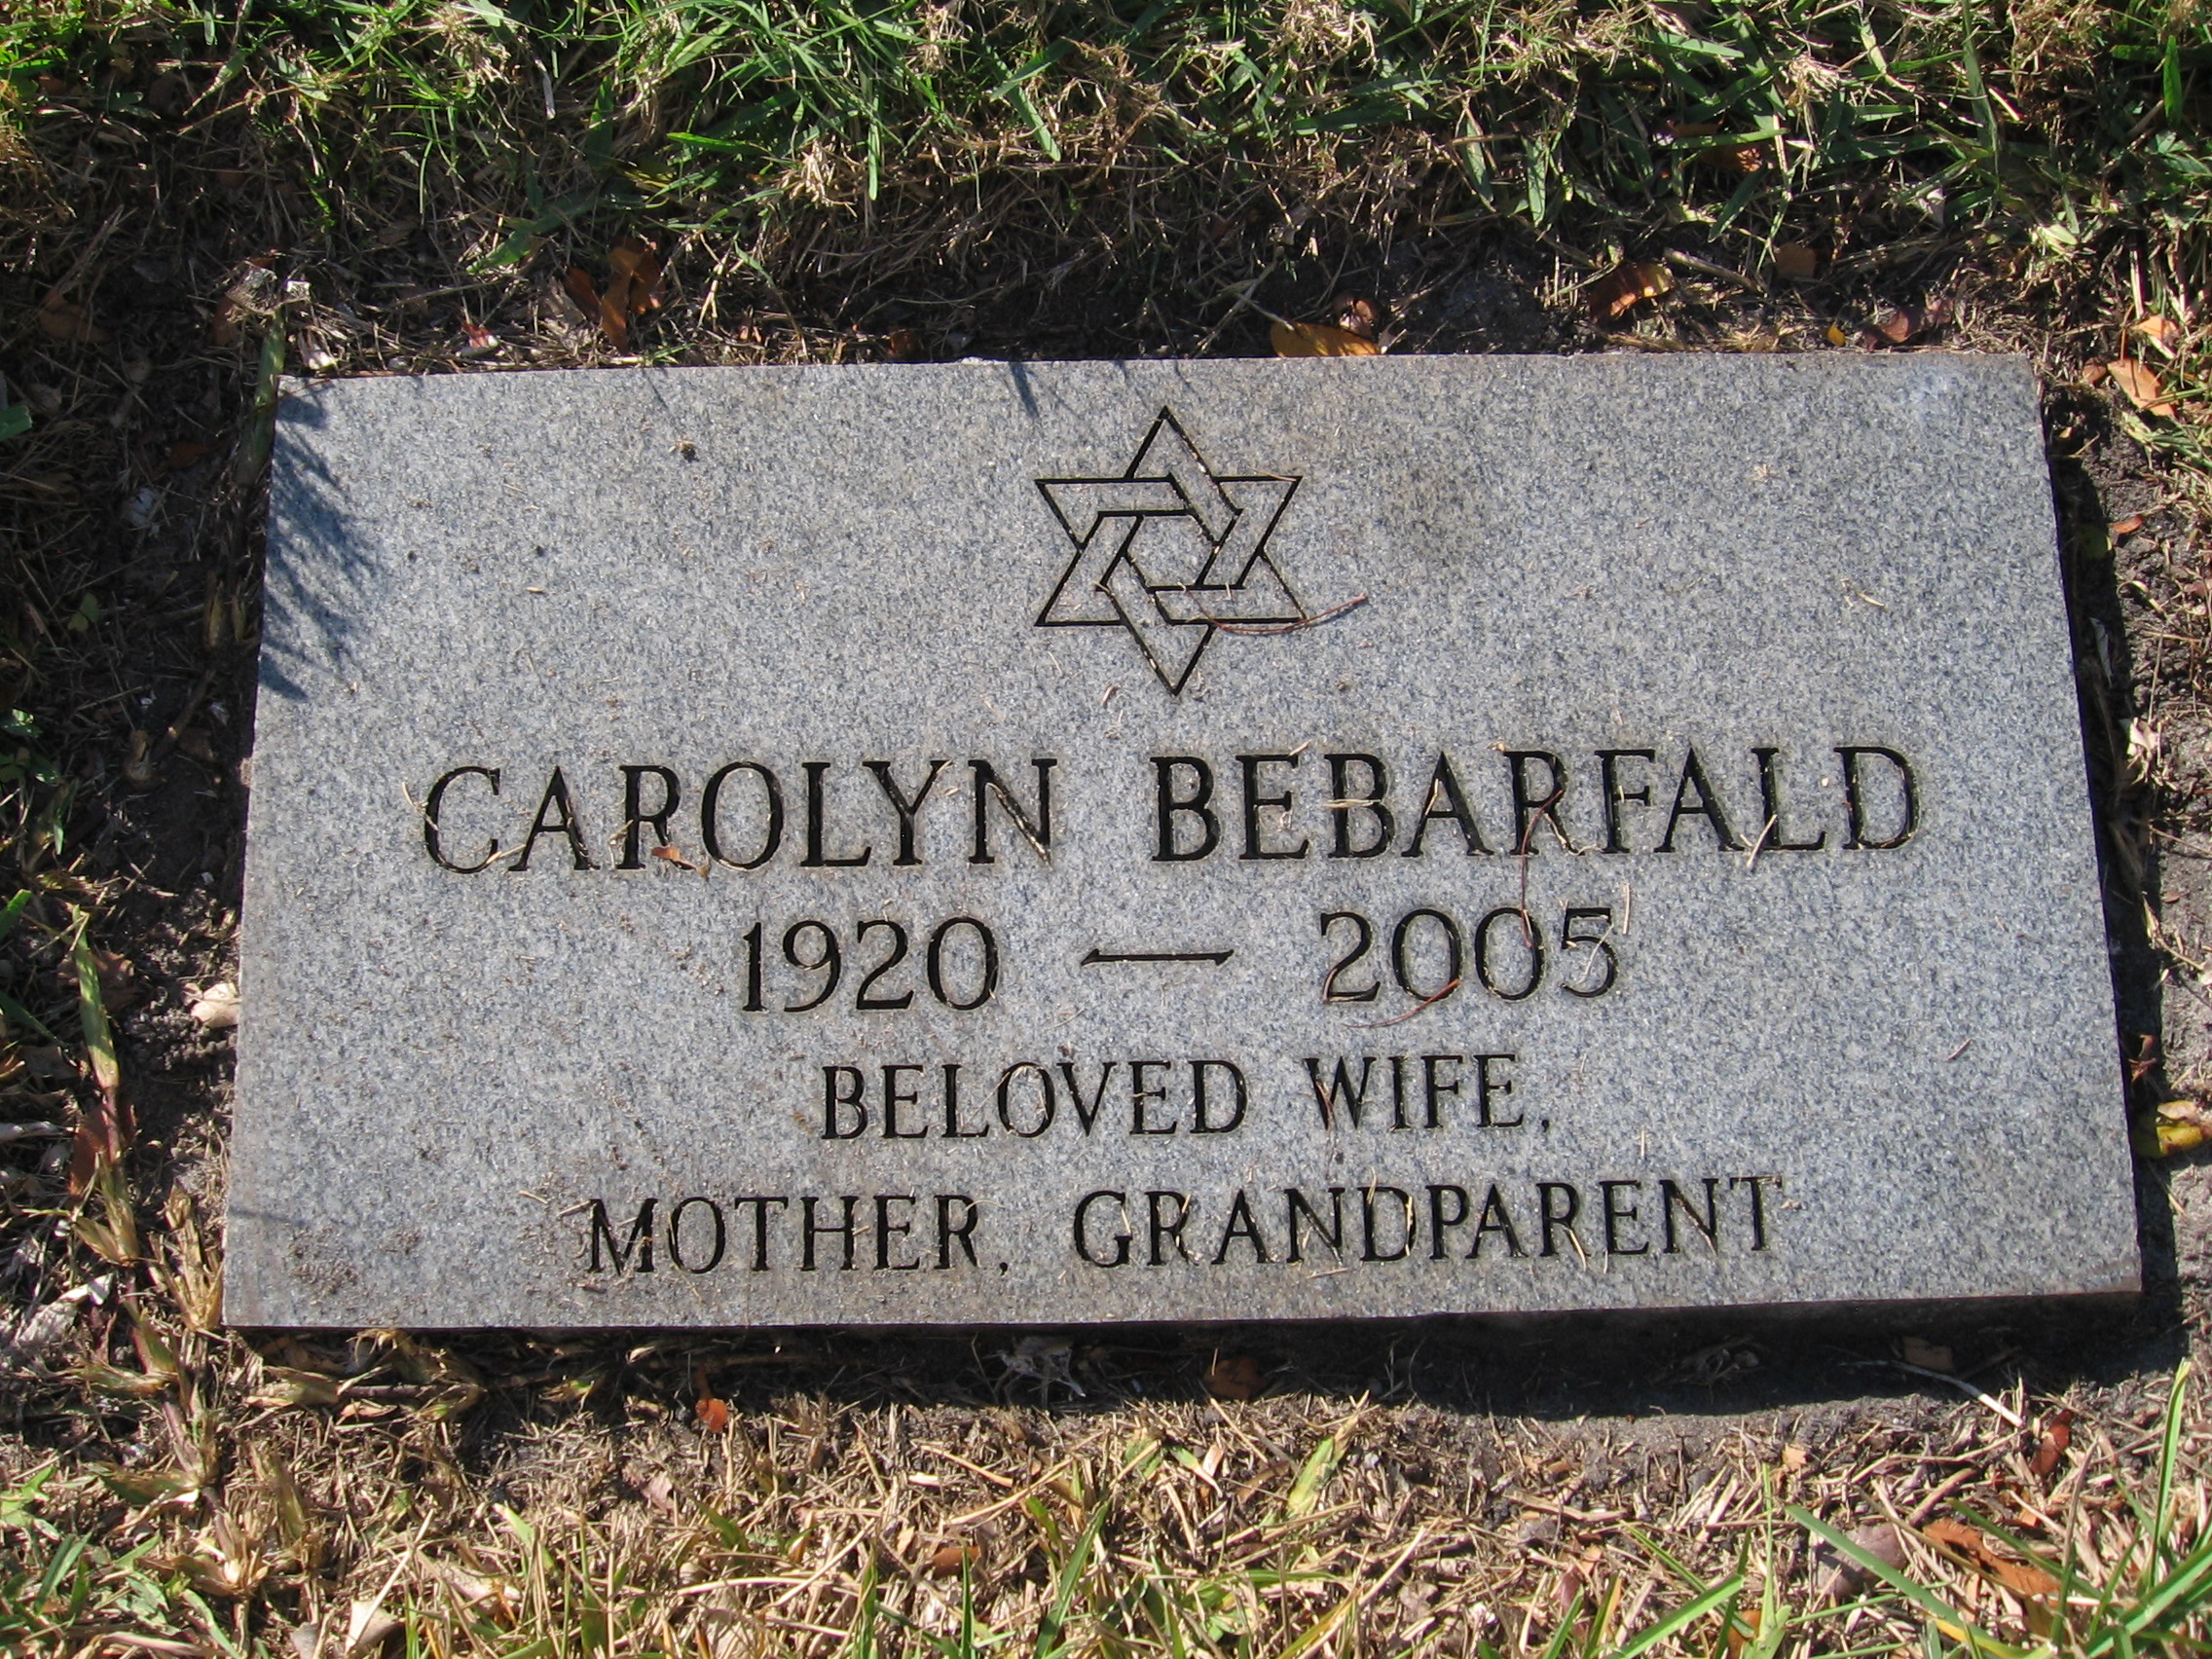 Carolyn Bebarfald